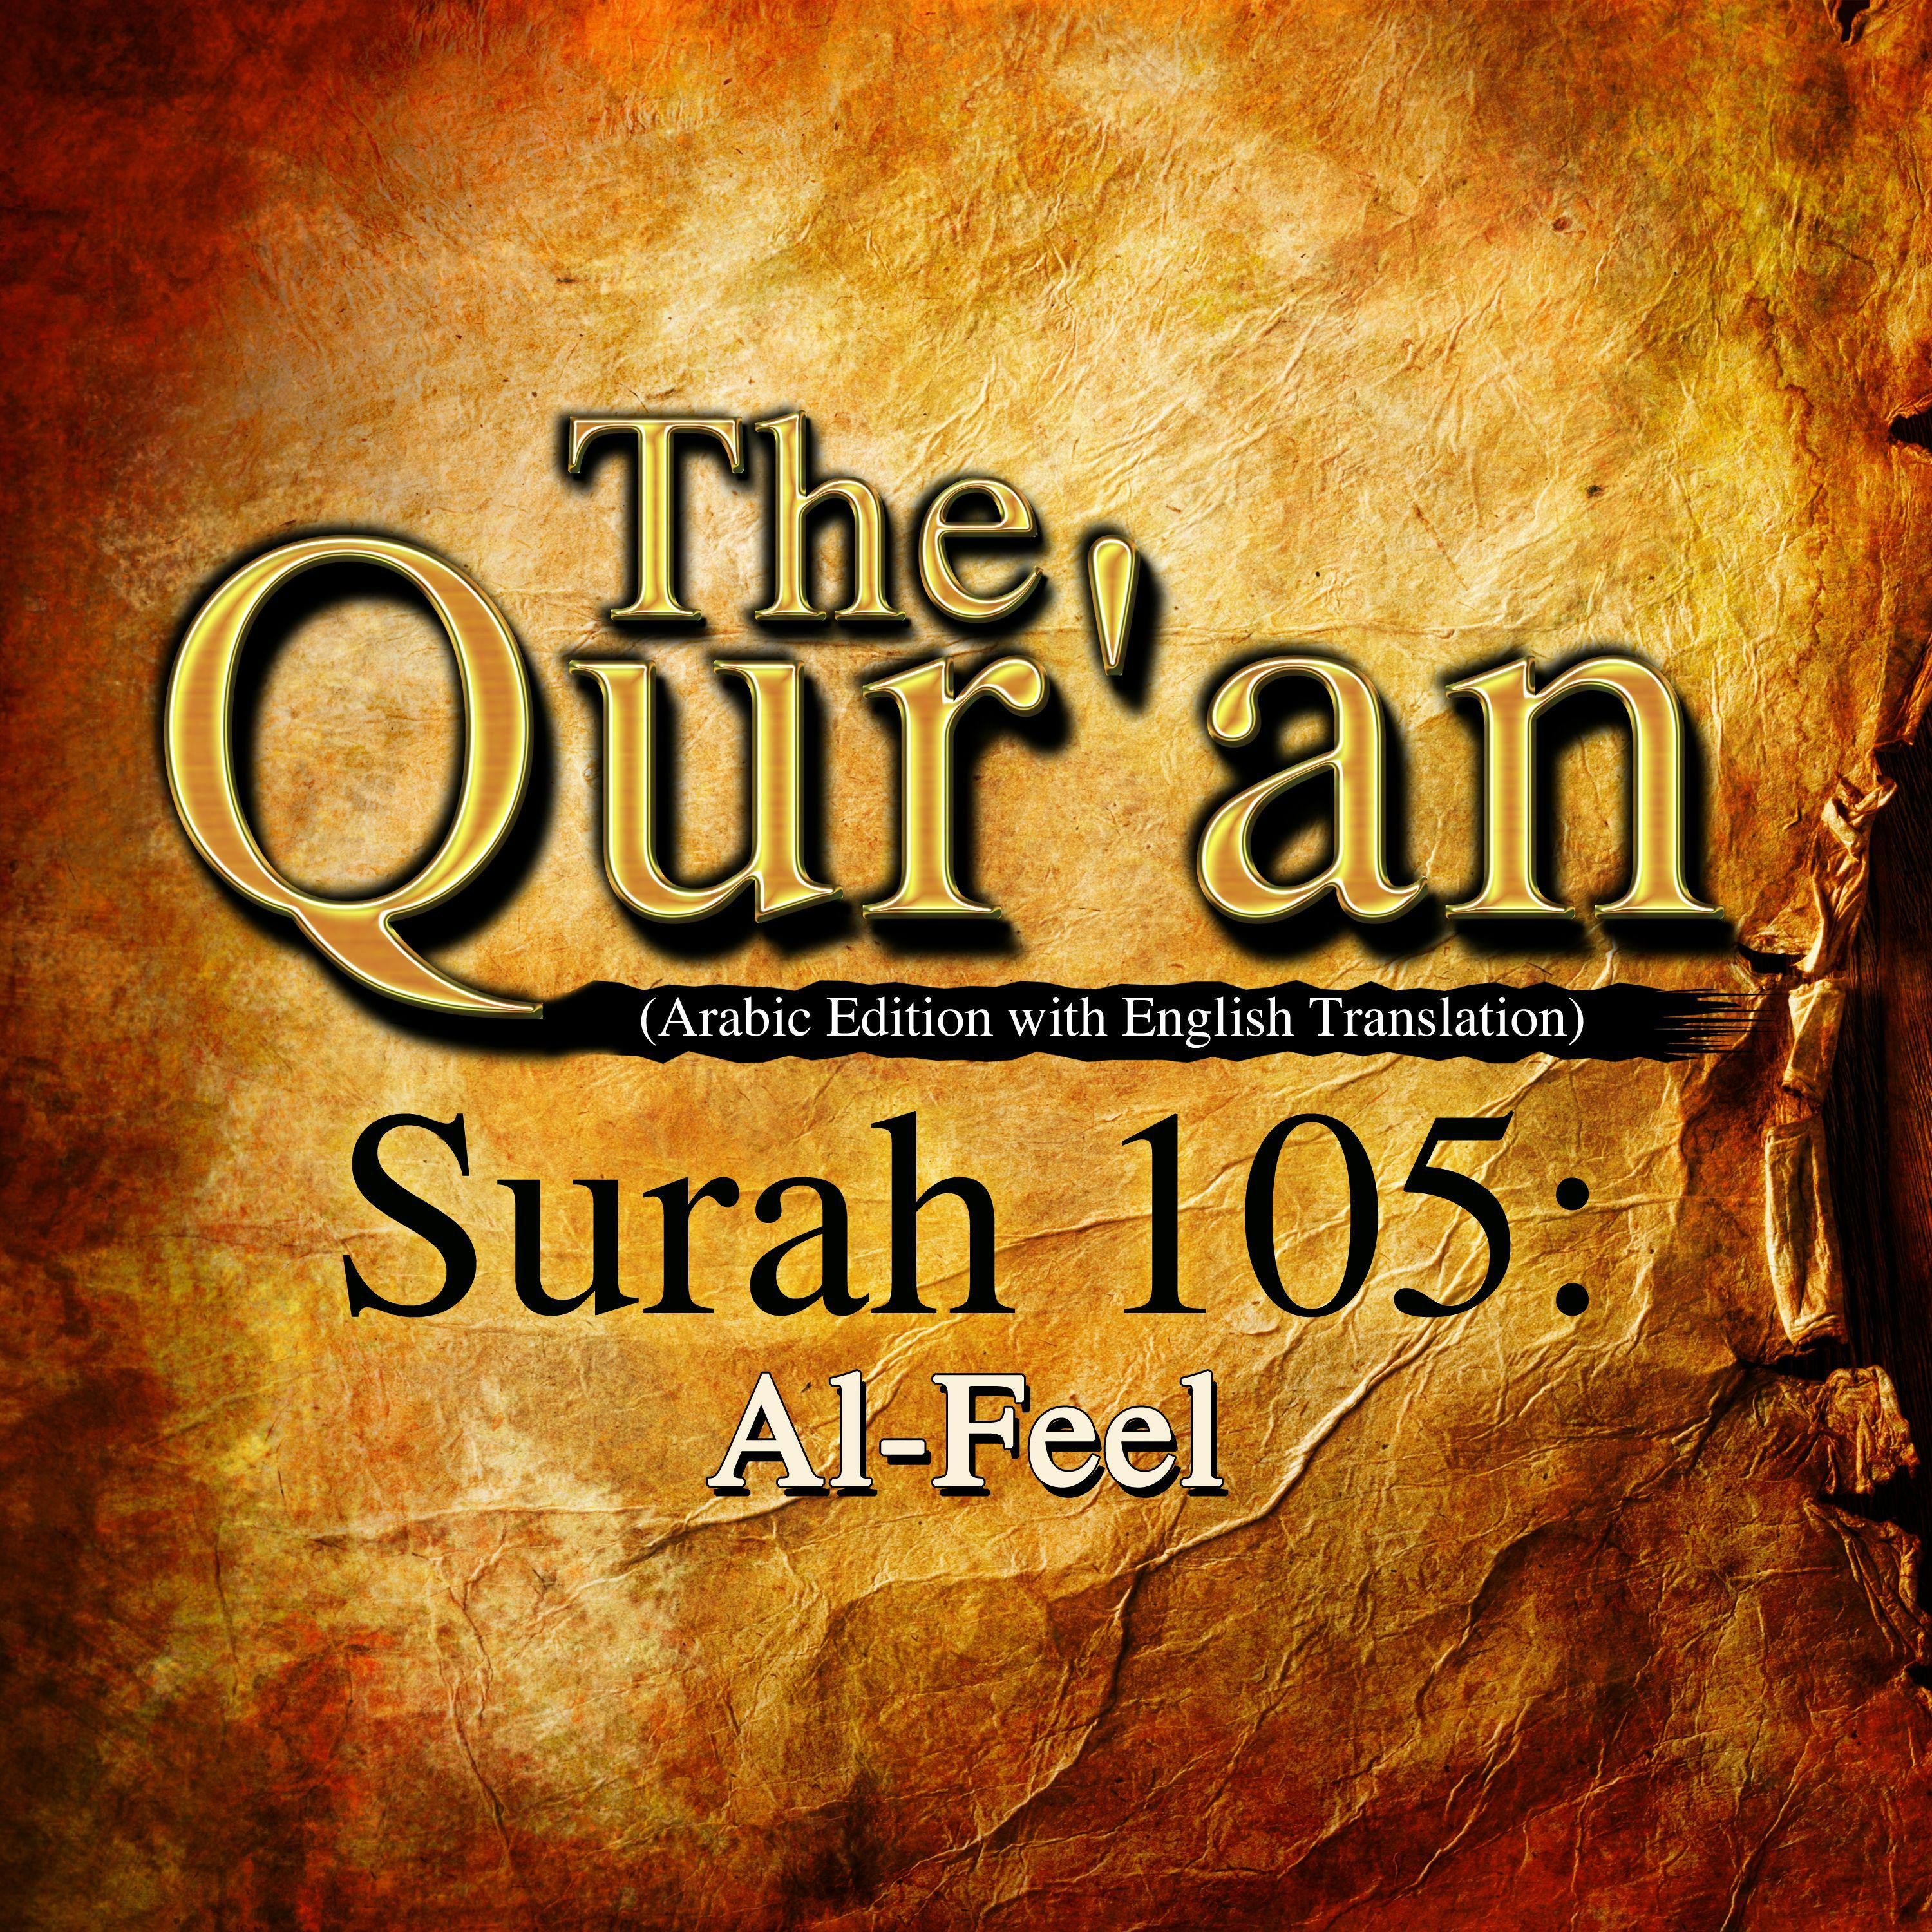 The Qur'an: Surah 105: Al-Feel - One Media iP LTD